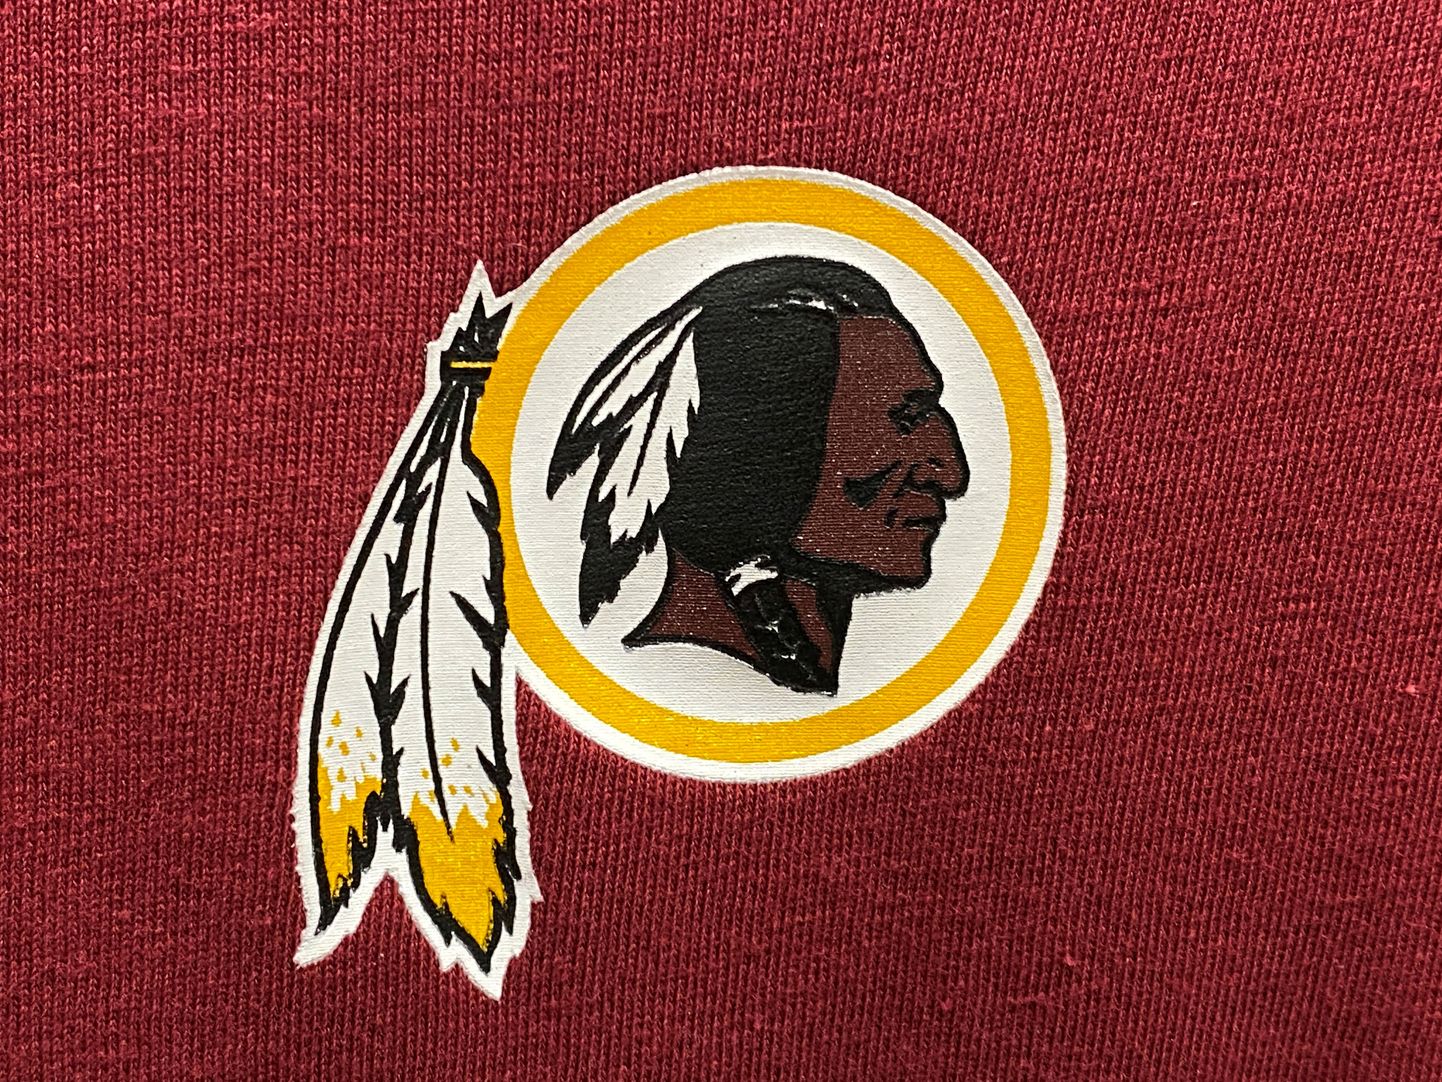 Vašingtonas "Redskins" logo